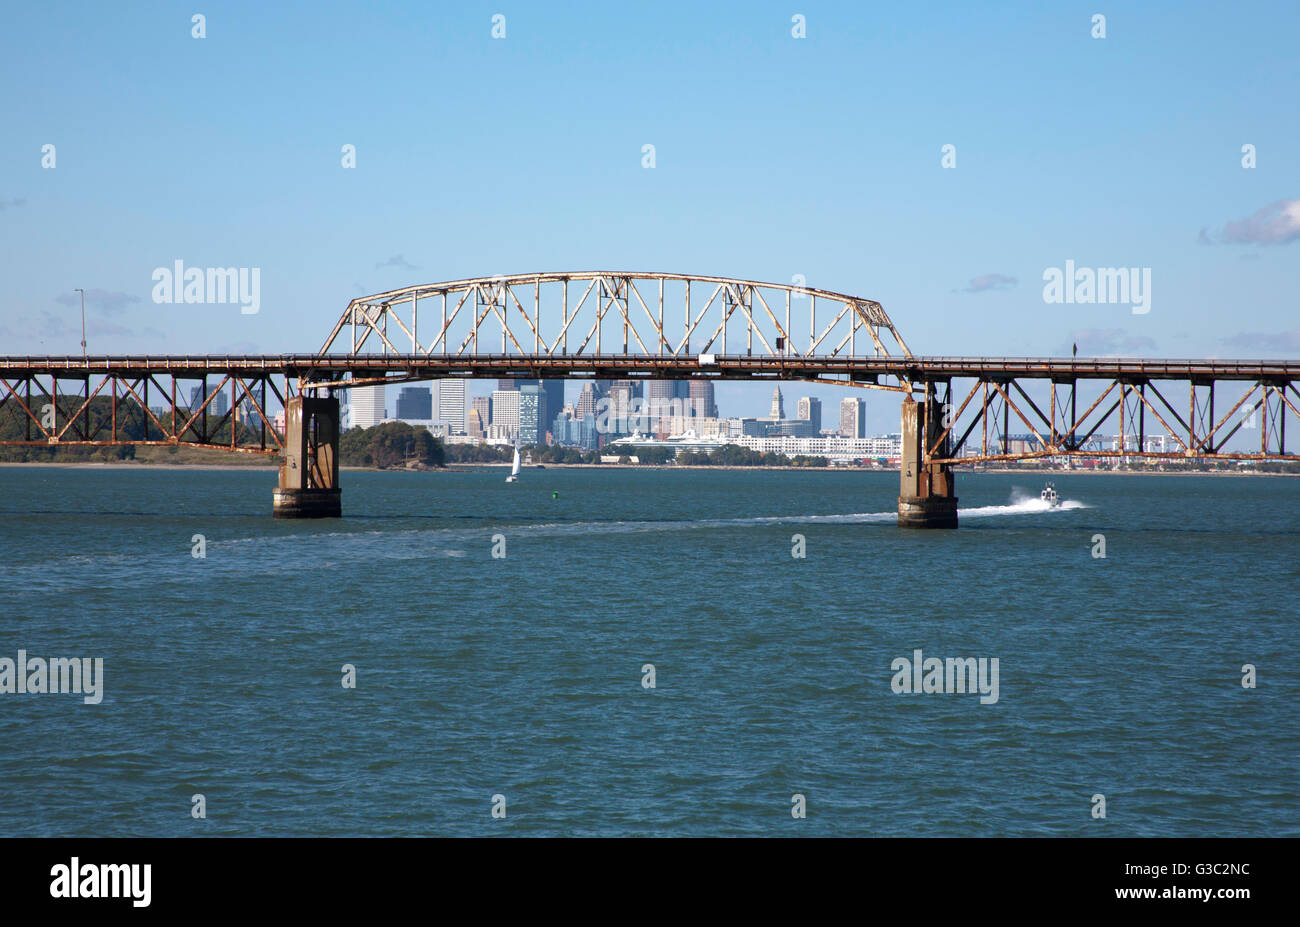 Brücke nach Long Island Boston Harbor und Inseln eine Fläche von Massachusetts Bay Boston Massachusetts, USA Stockfoto